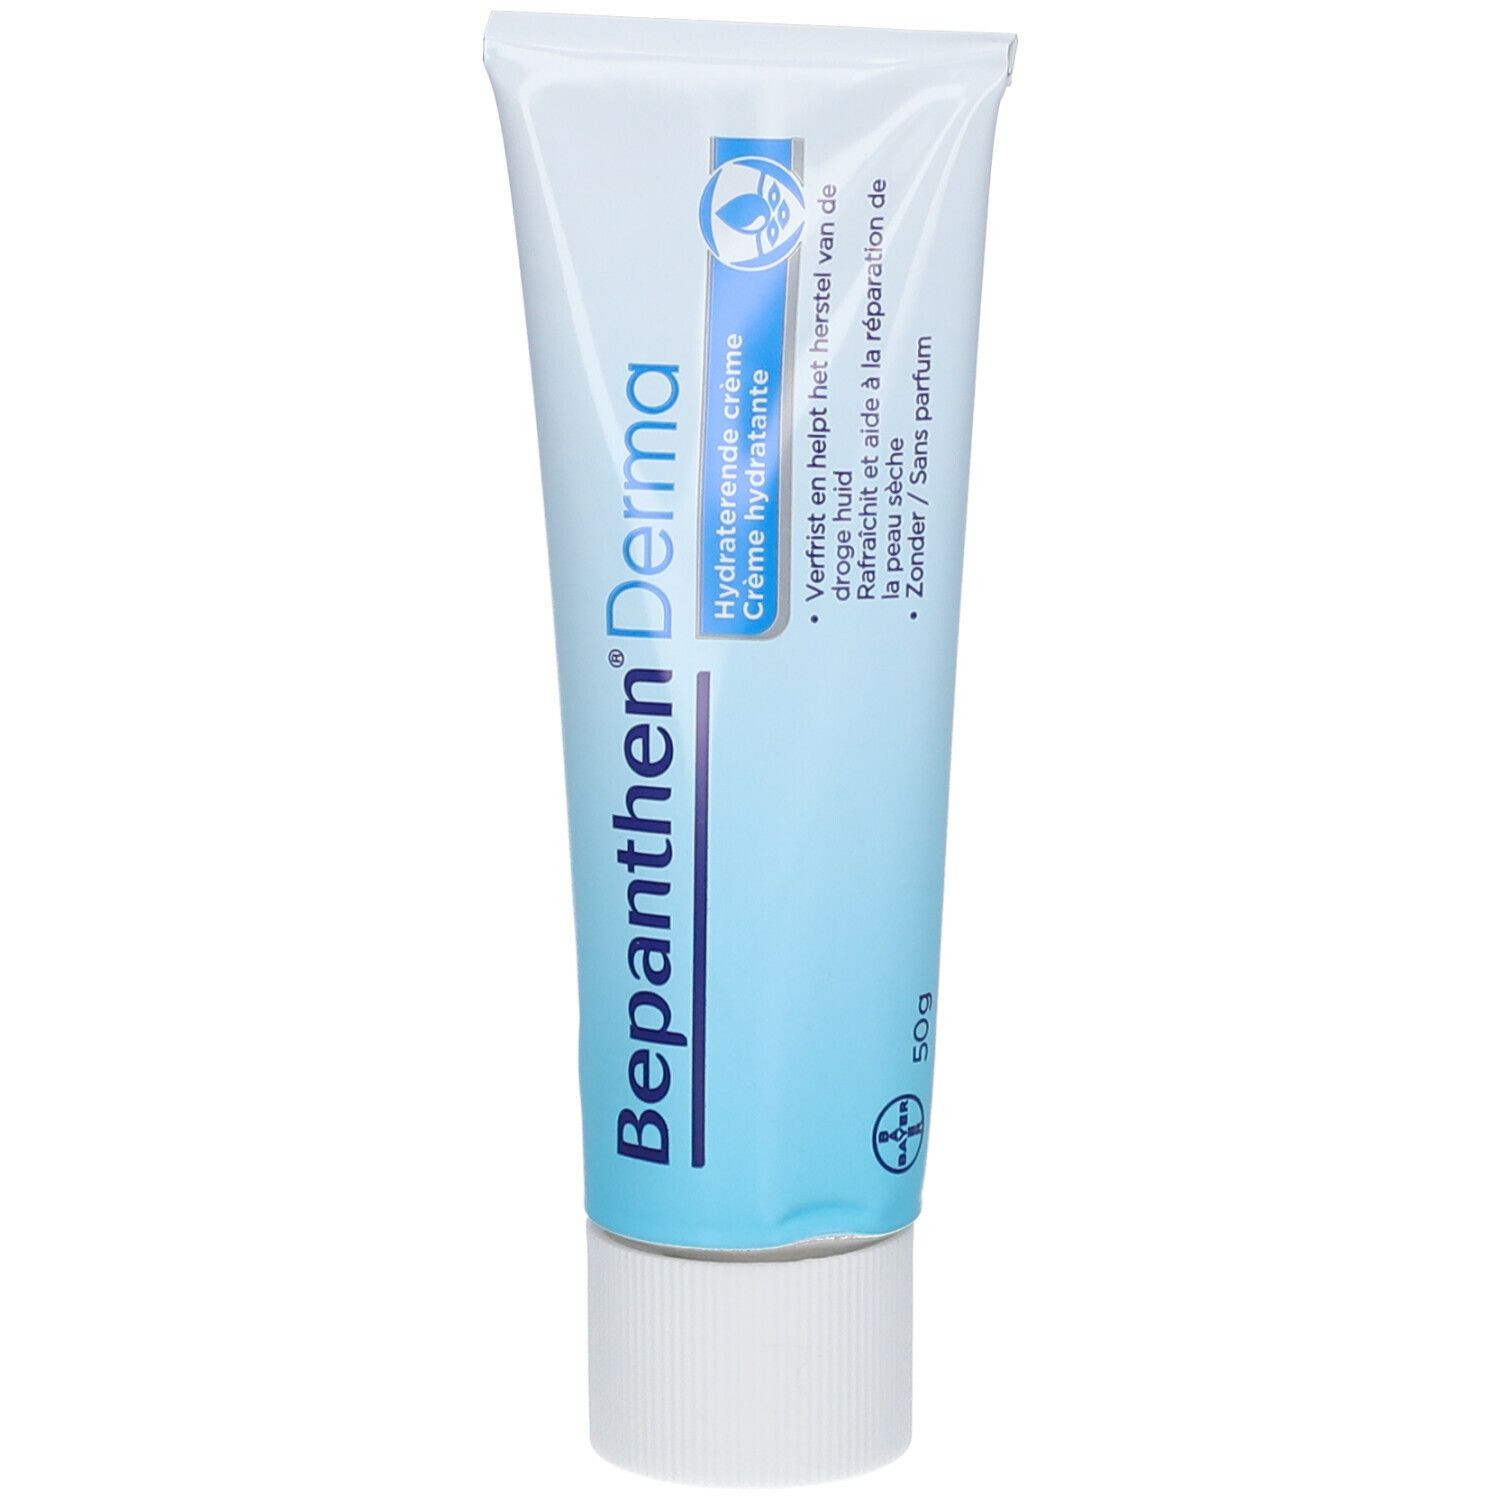 Bepanthen® Derma - Crème Hydratante